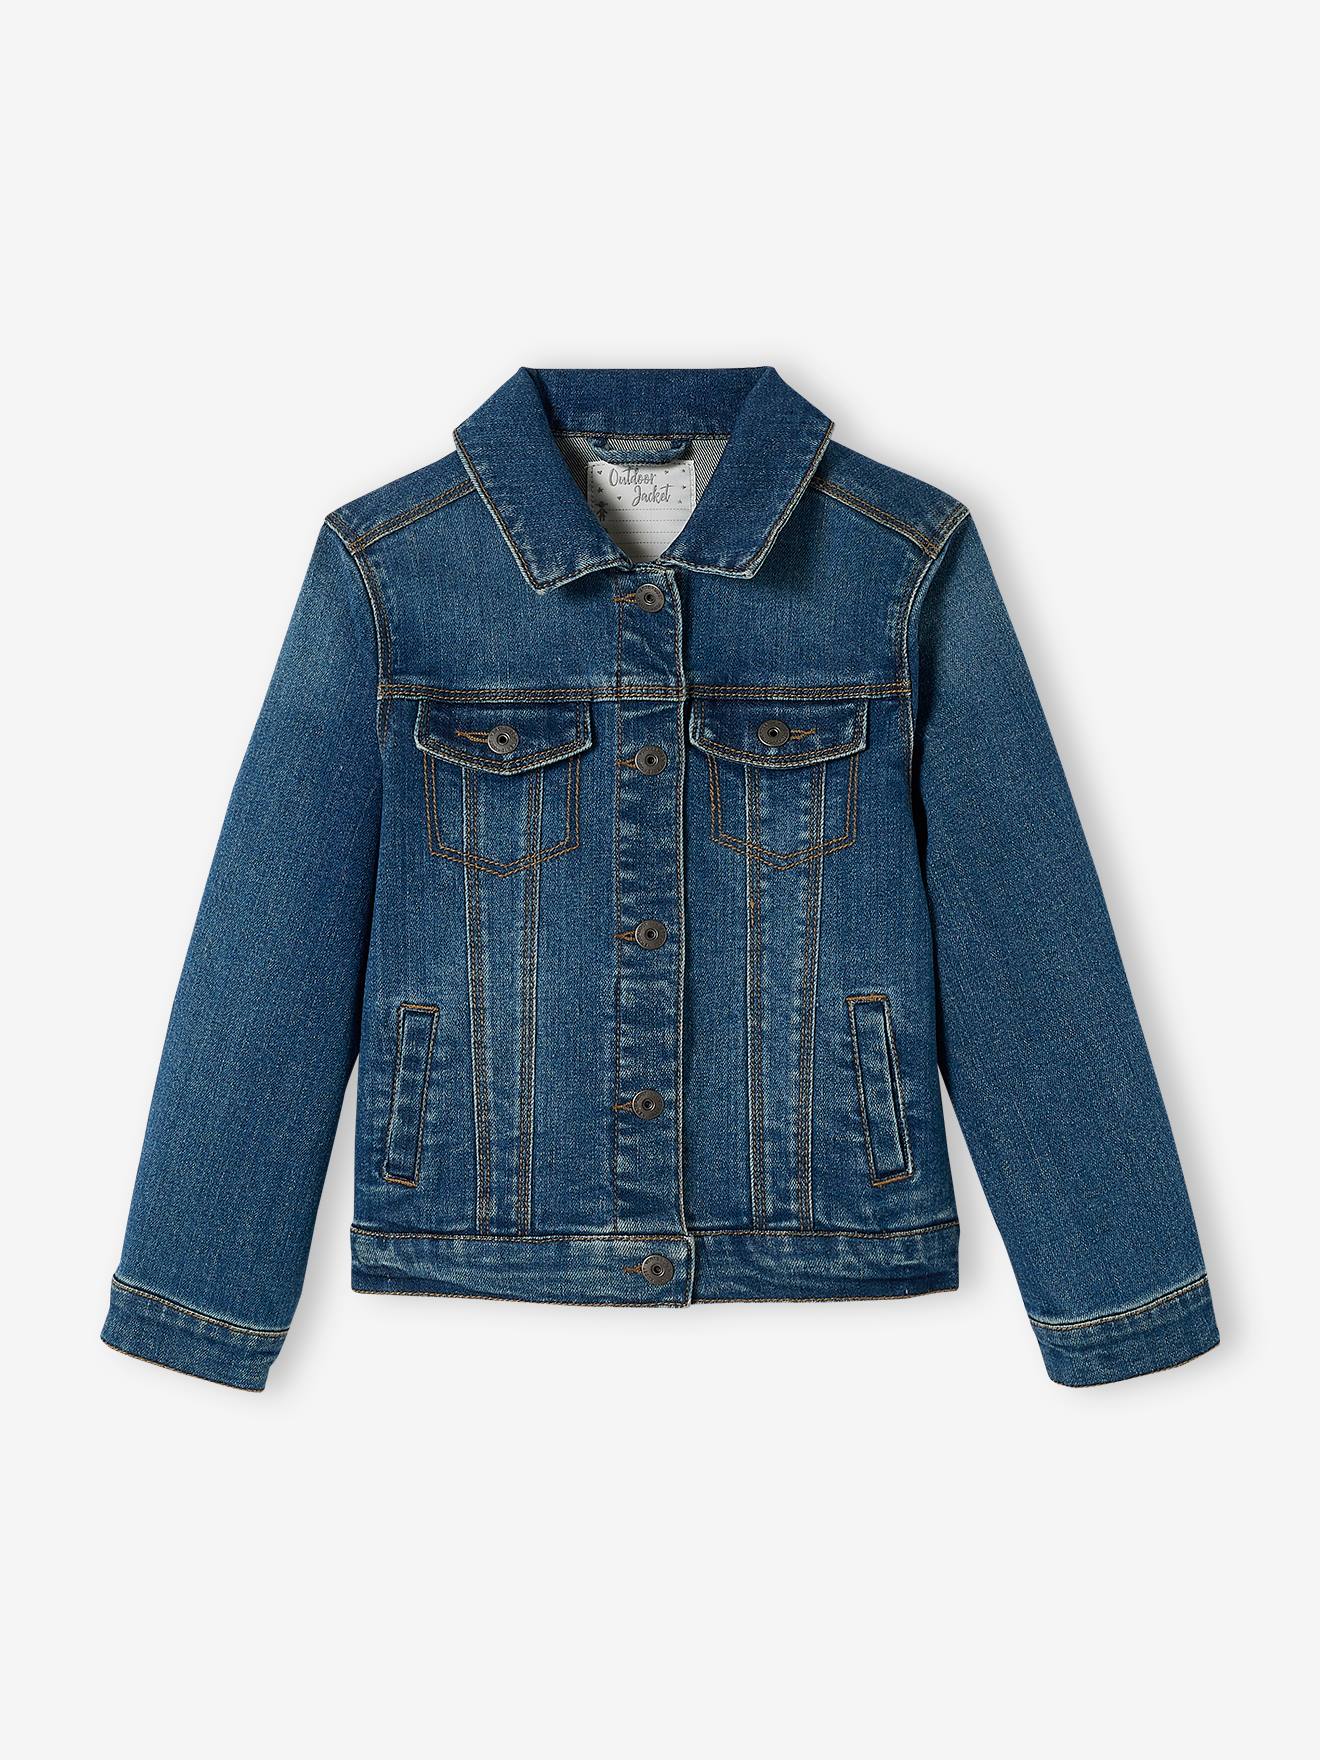 Vertbaudent Vertbaudent denim jacket Navy Blue KIDS FASHION Jackets Jean discount 88% 